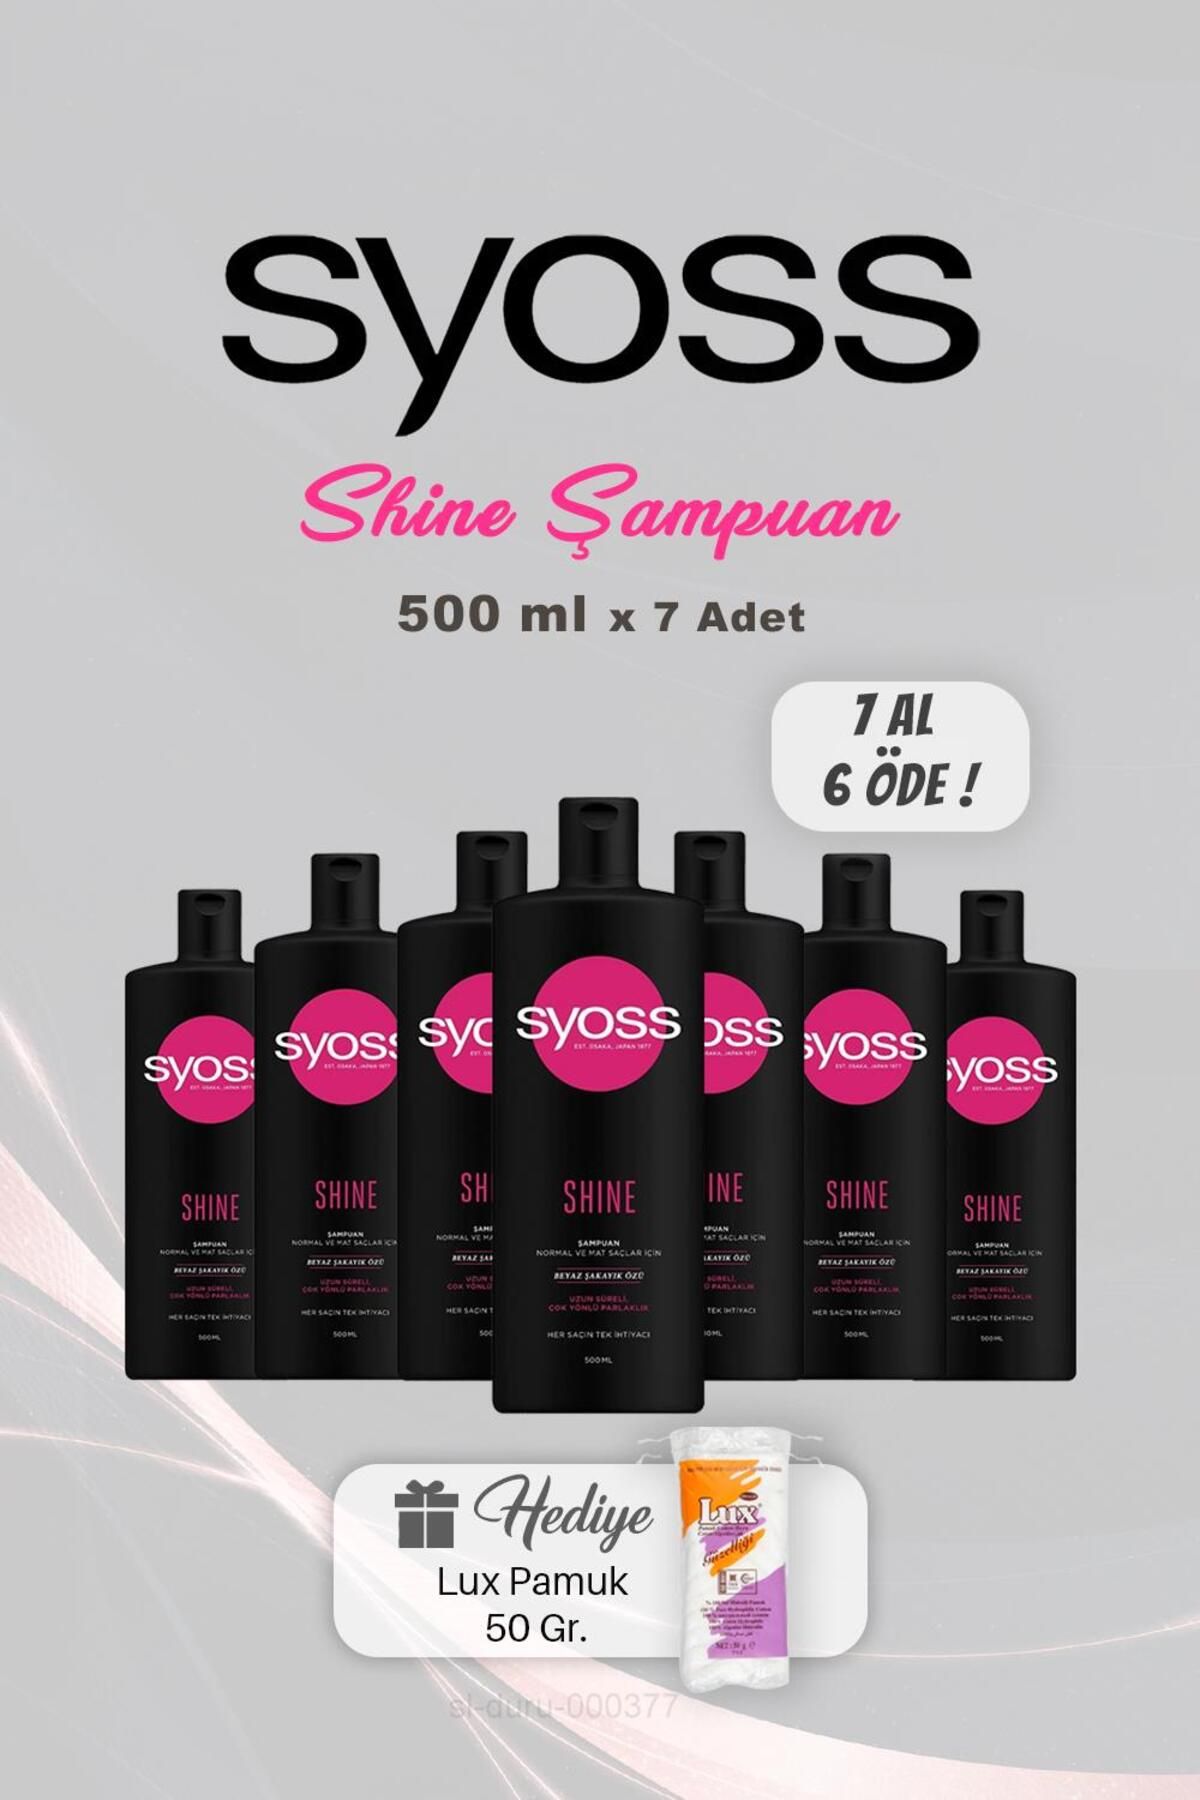 Syoss 7 AL 6 ÖDE Syoss Şampuan Shine 500 ml, Pamuk Hediyeli